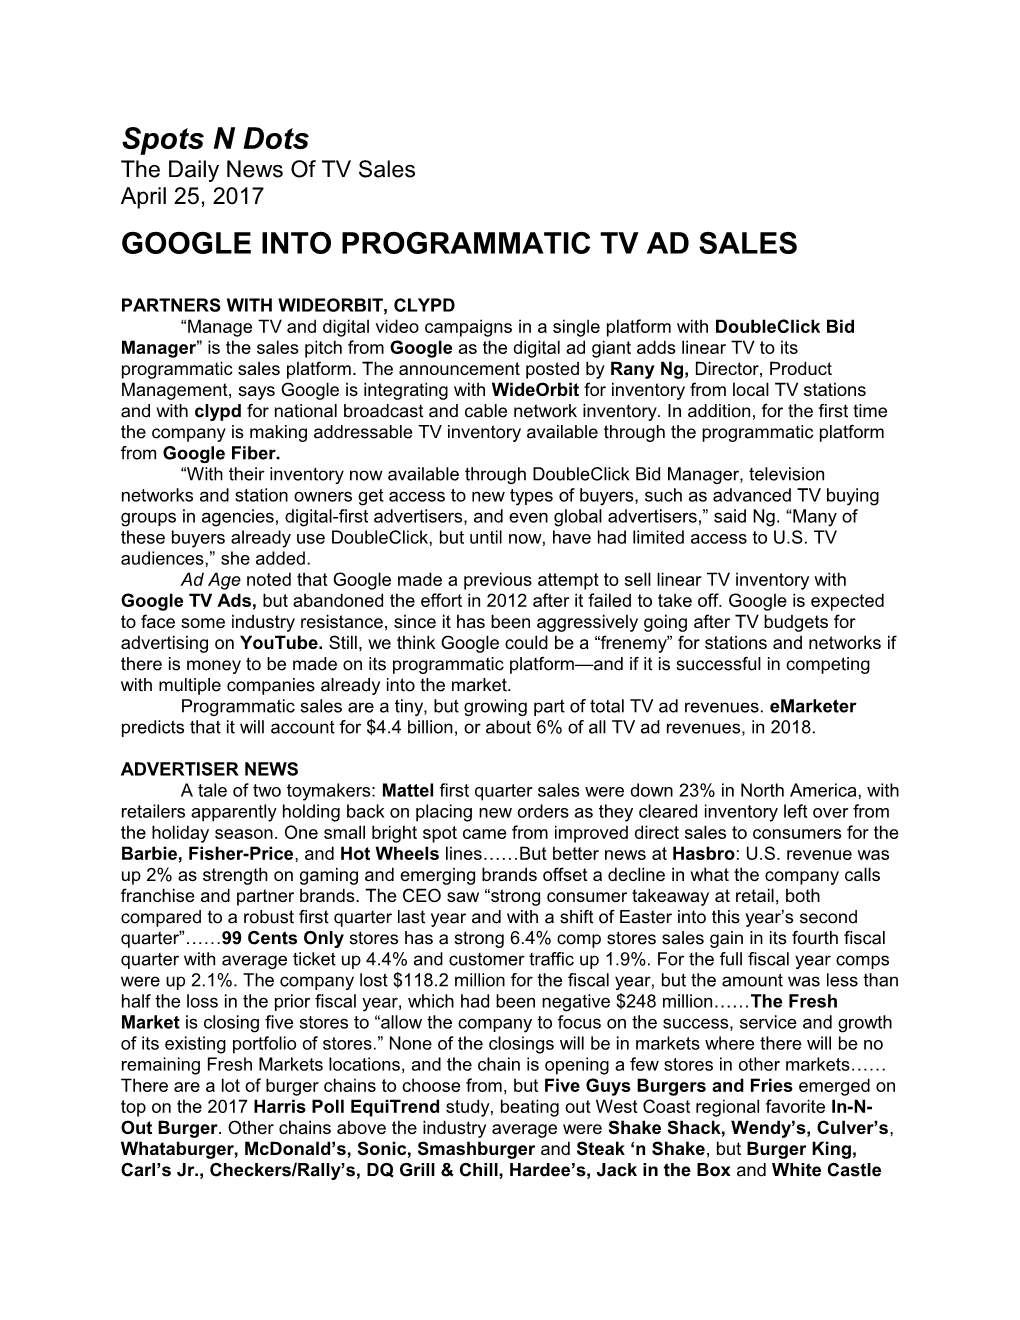 Google Into Programmatic Tv Ad Sales